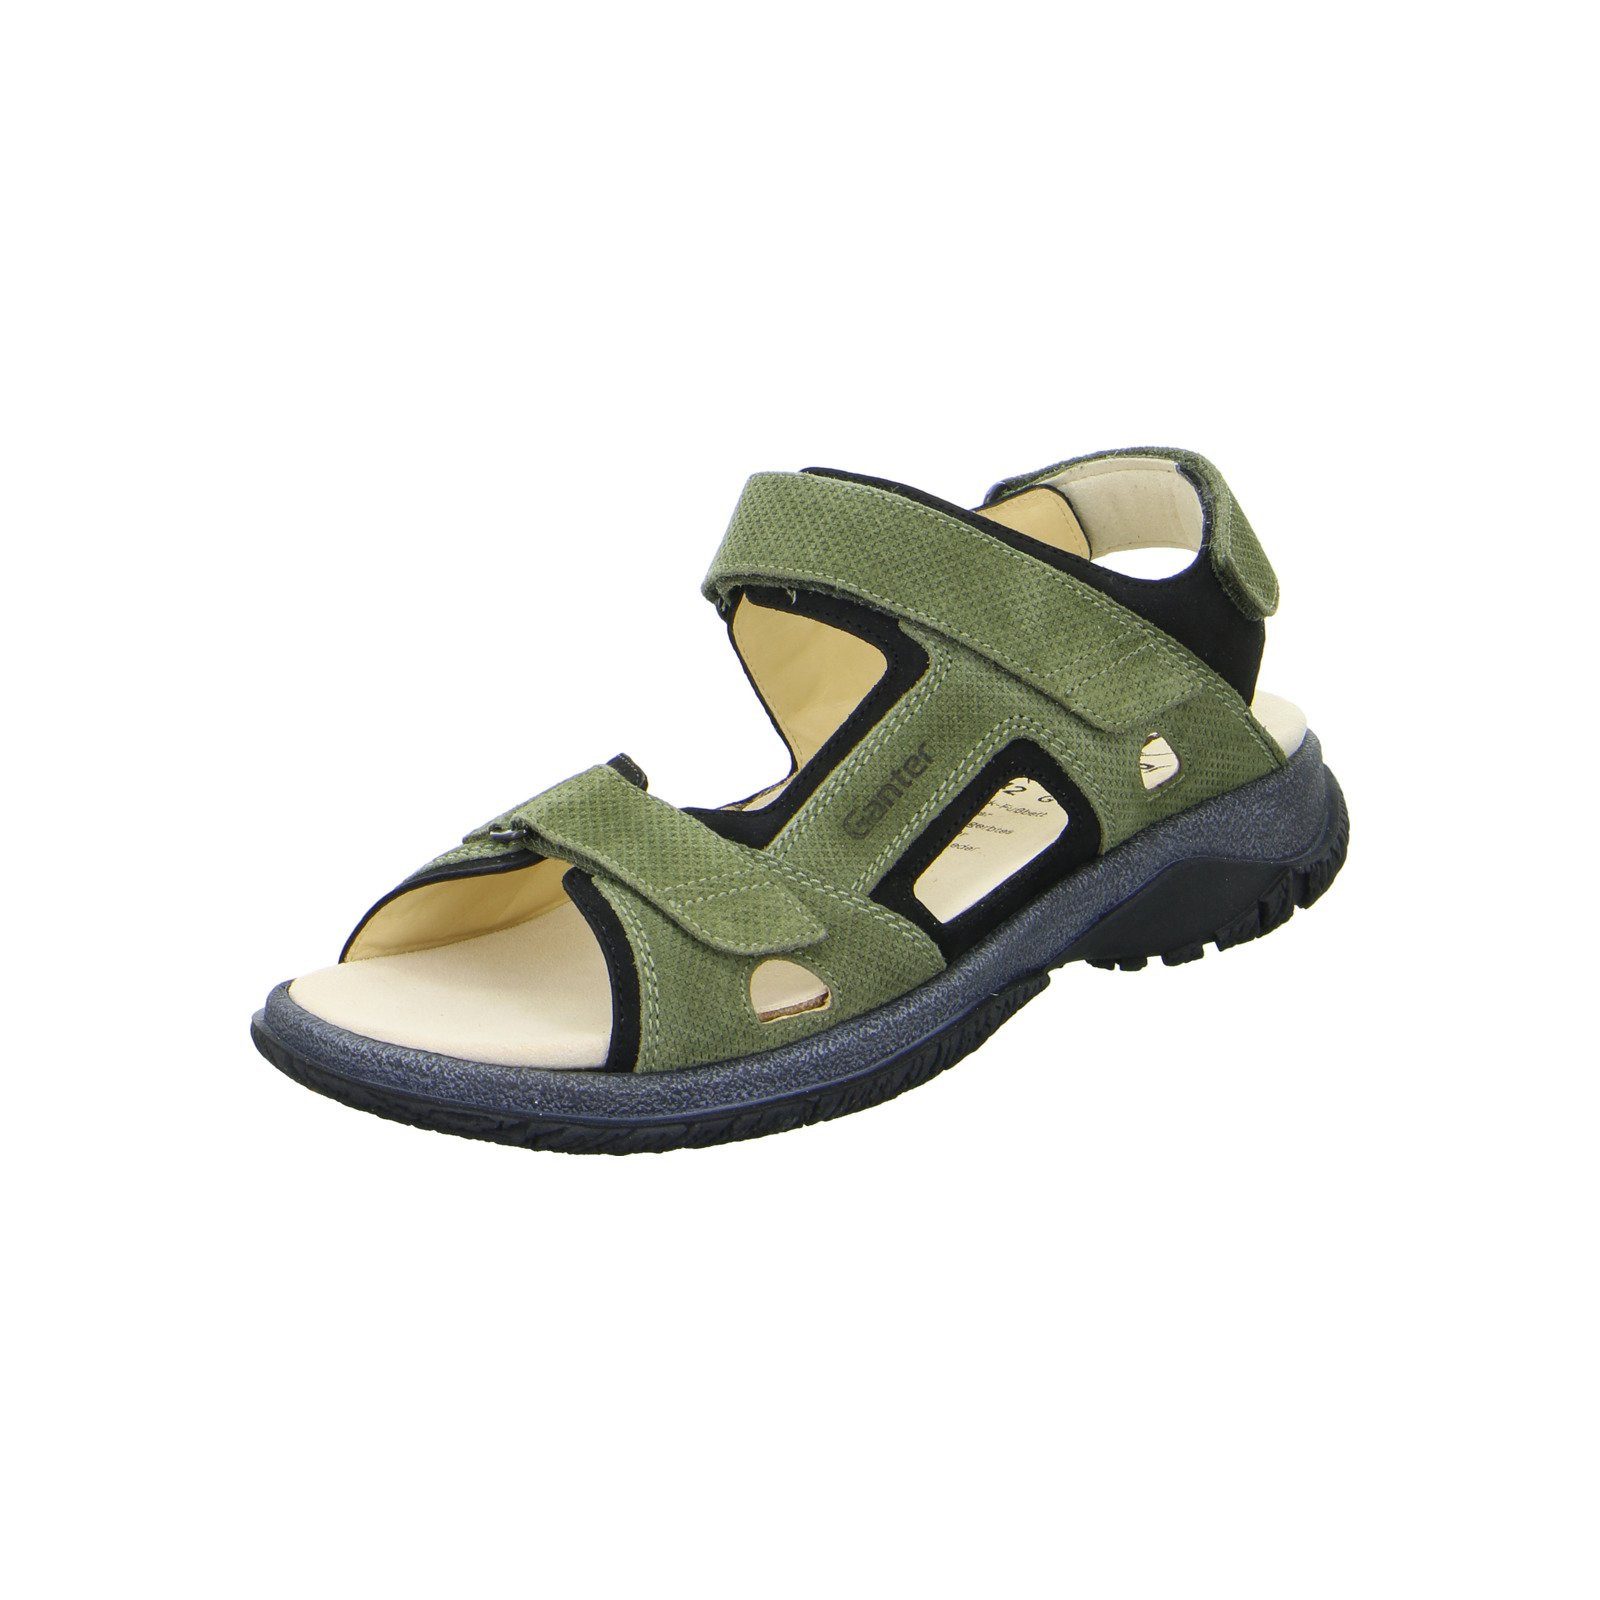 Ganter Giovanni - Herren Schuhe Sandale Nubuk grün